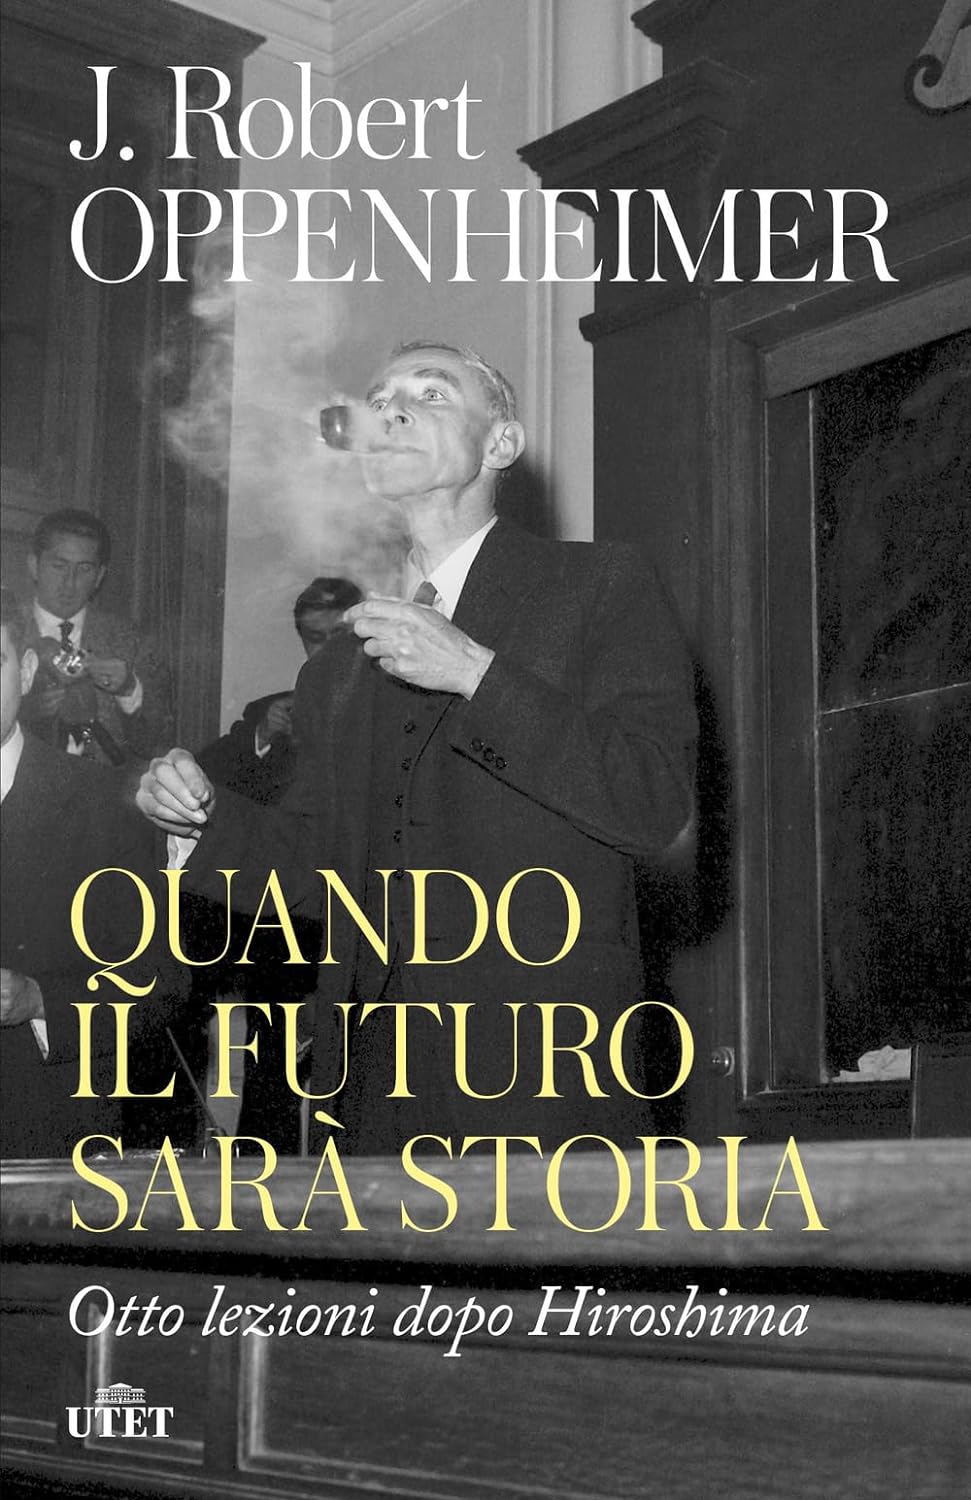 Robert J. Oppenheimer: Quando il futuro sarà storia (Italiano language, UTET)